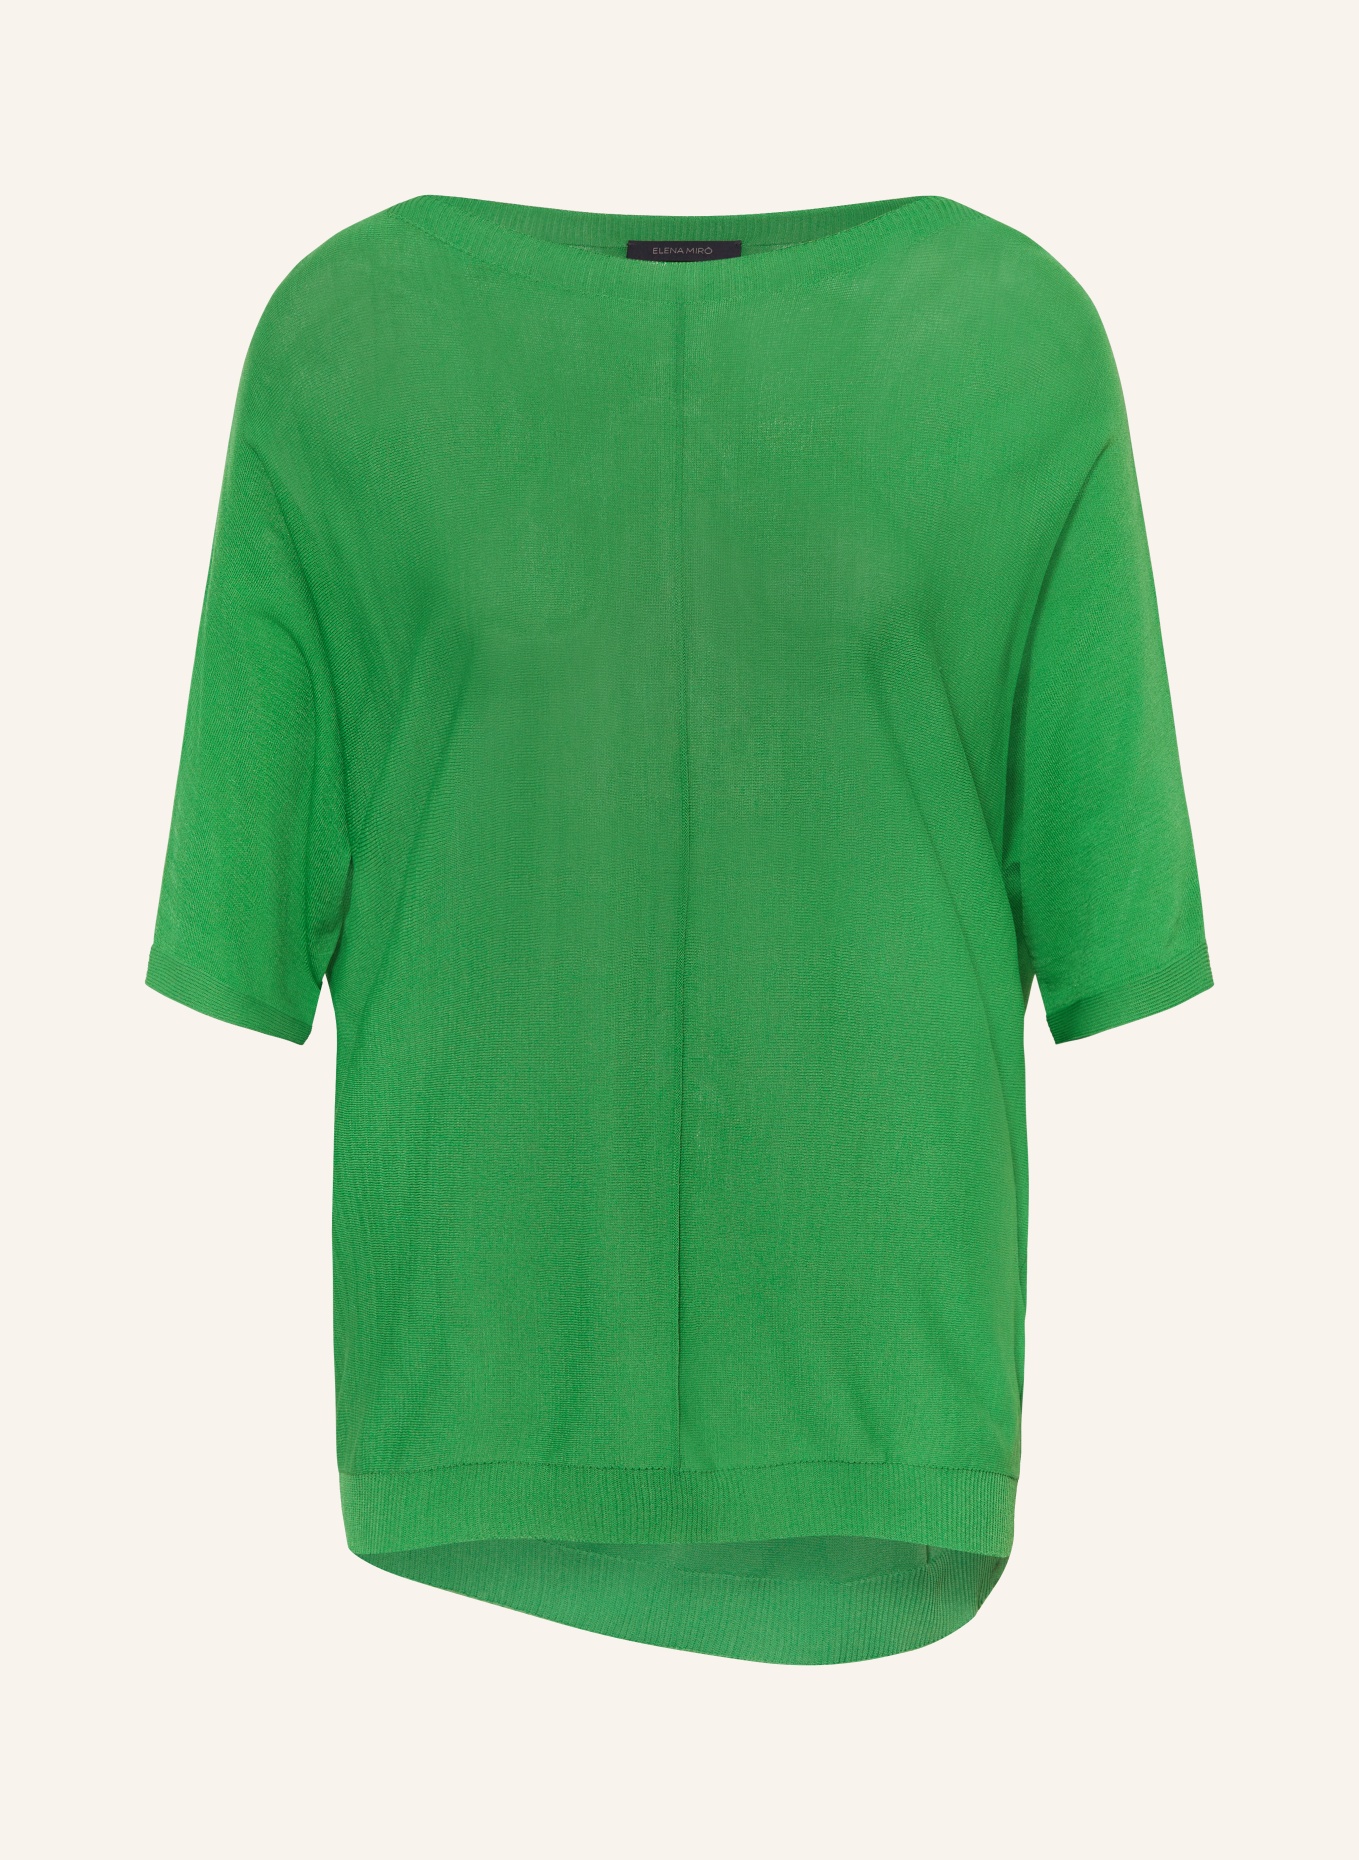 ELENA MIRO Strickshirt, Farbe: GRÜN (Bild 1)